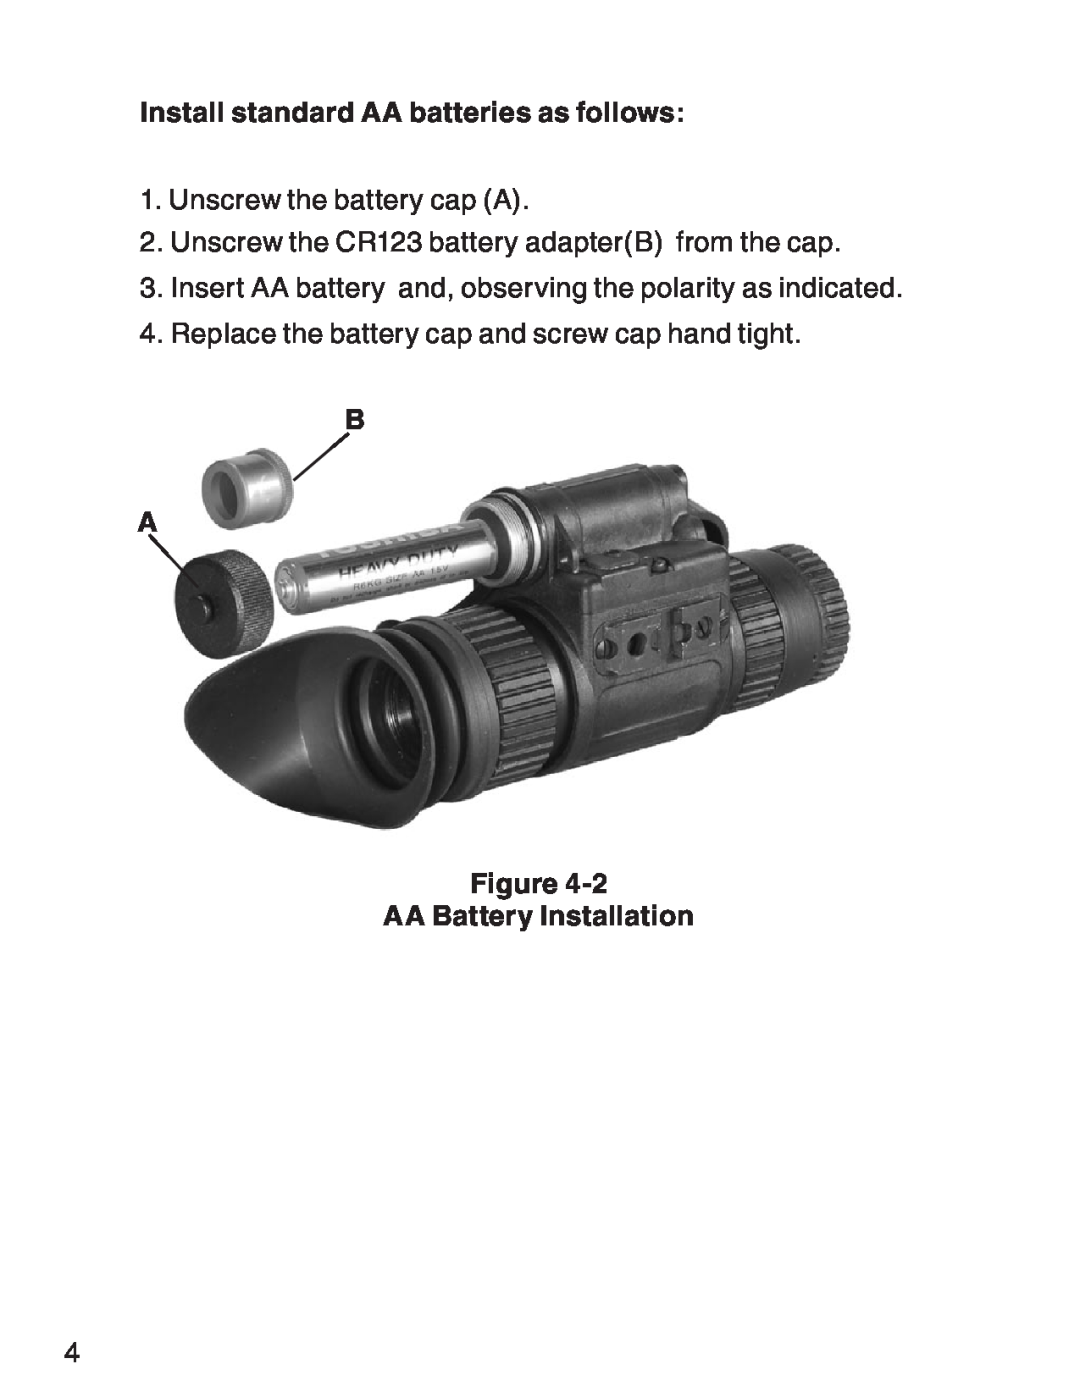 ATN Install standard AA batteries as follows, Unscrew the battery cap A, Unscrew the CR123 battery adapterB from the cap 